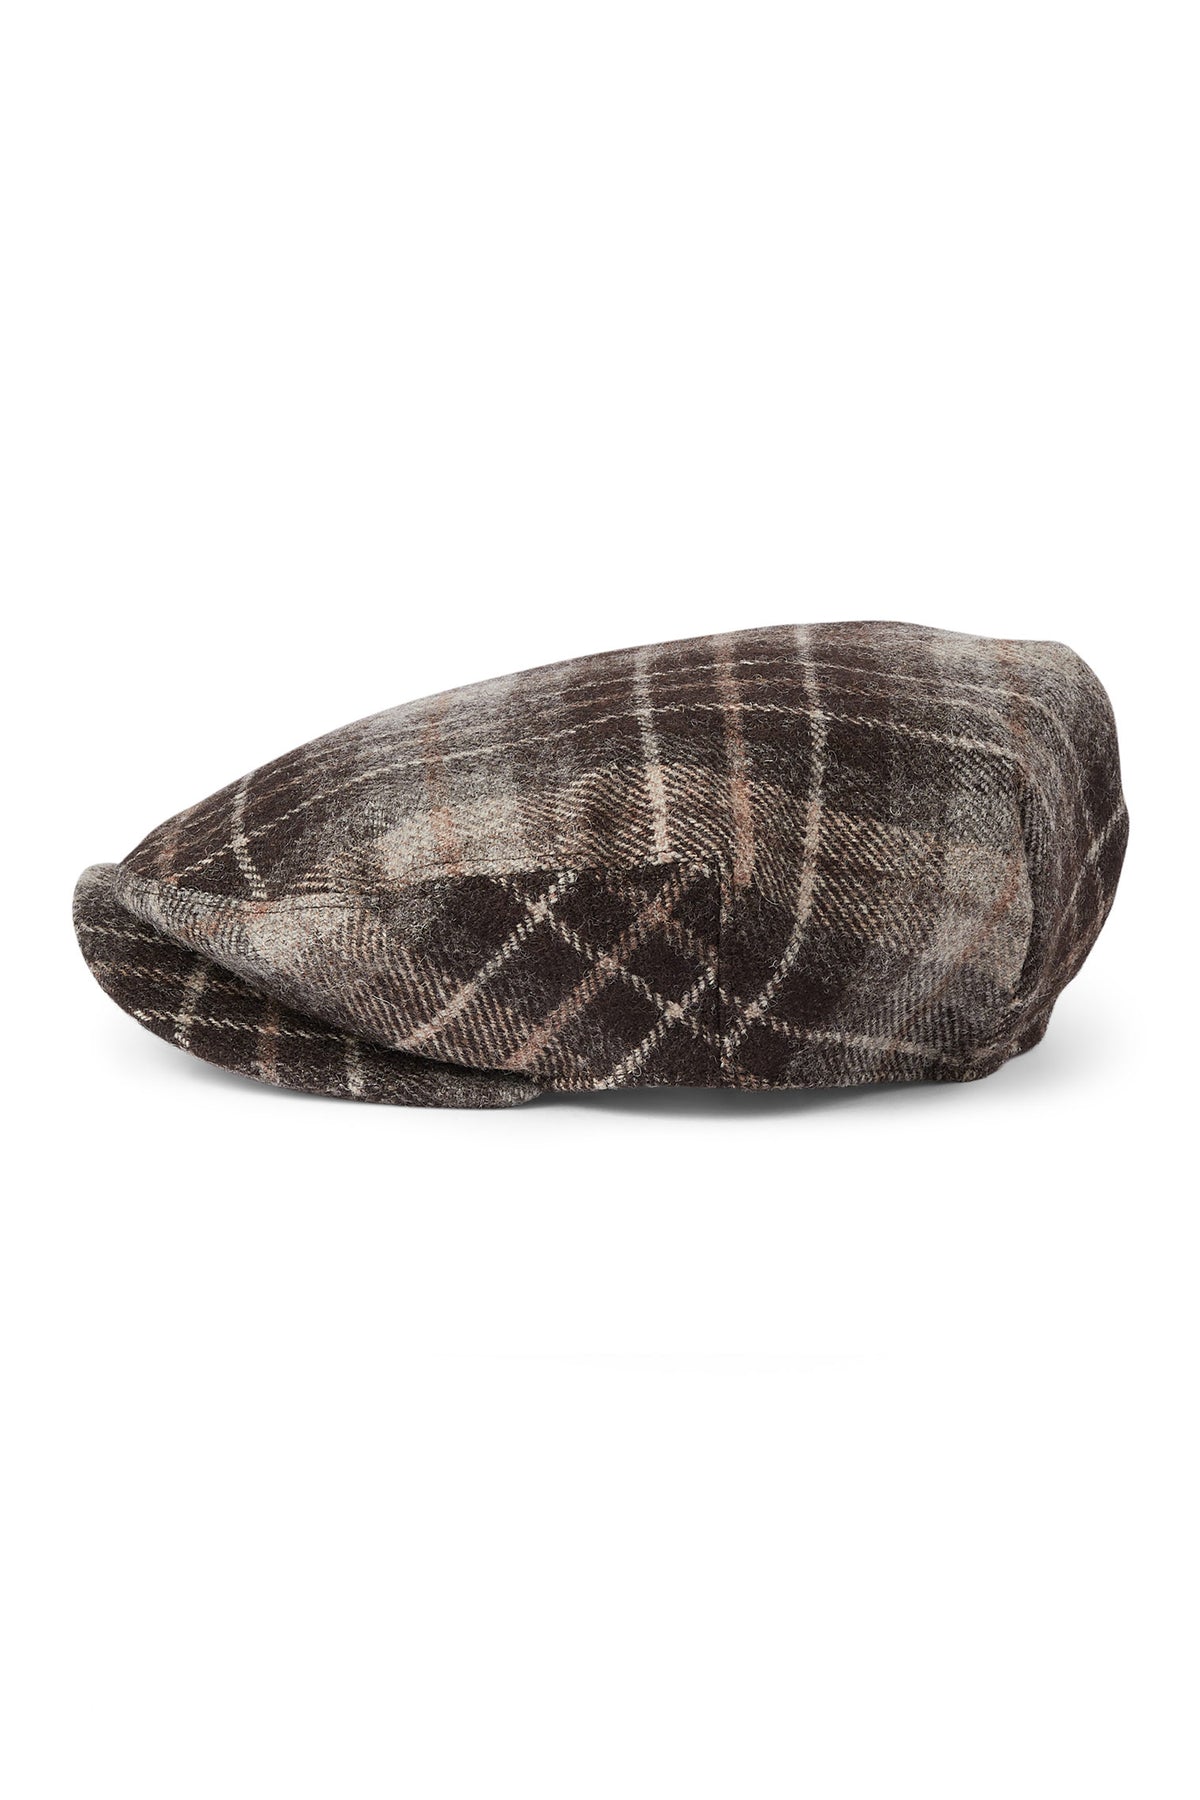 Turnberry Plaid Flat Cap, Brown/Beige / 58 cm - Lock & Co. Hatters Mens Hats